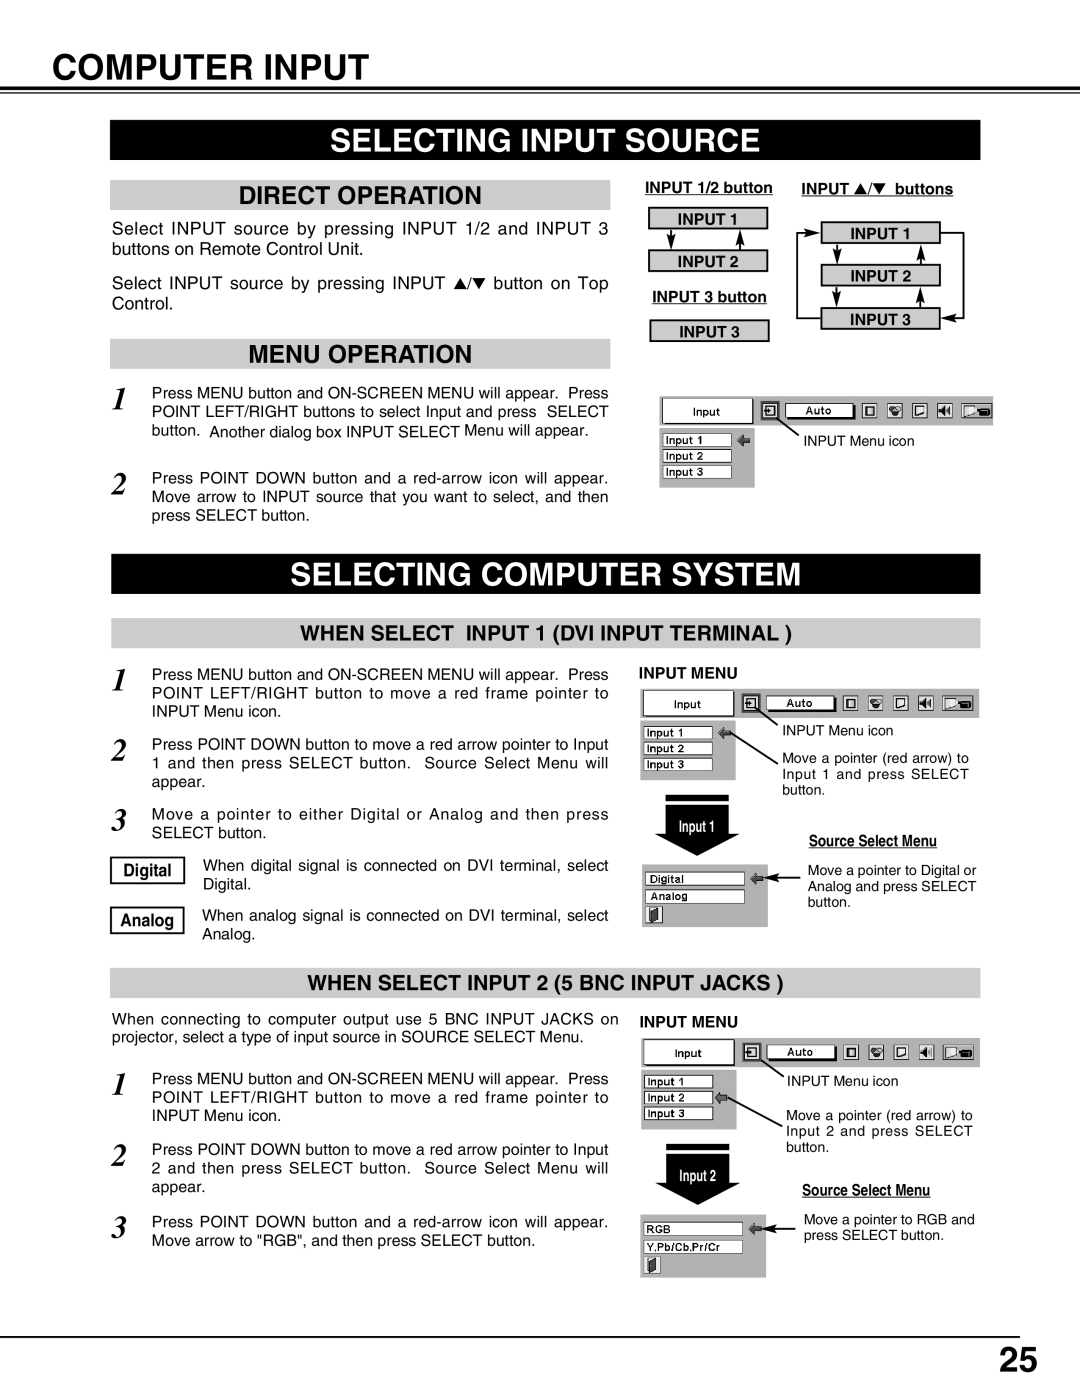 Eiki LC-SX4LA Computer Input, Selecting Input Source, Selecting Computer System, Direct Operation, Menu Operation 